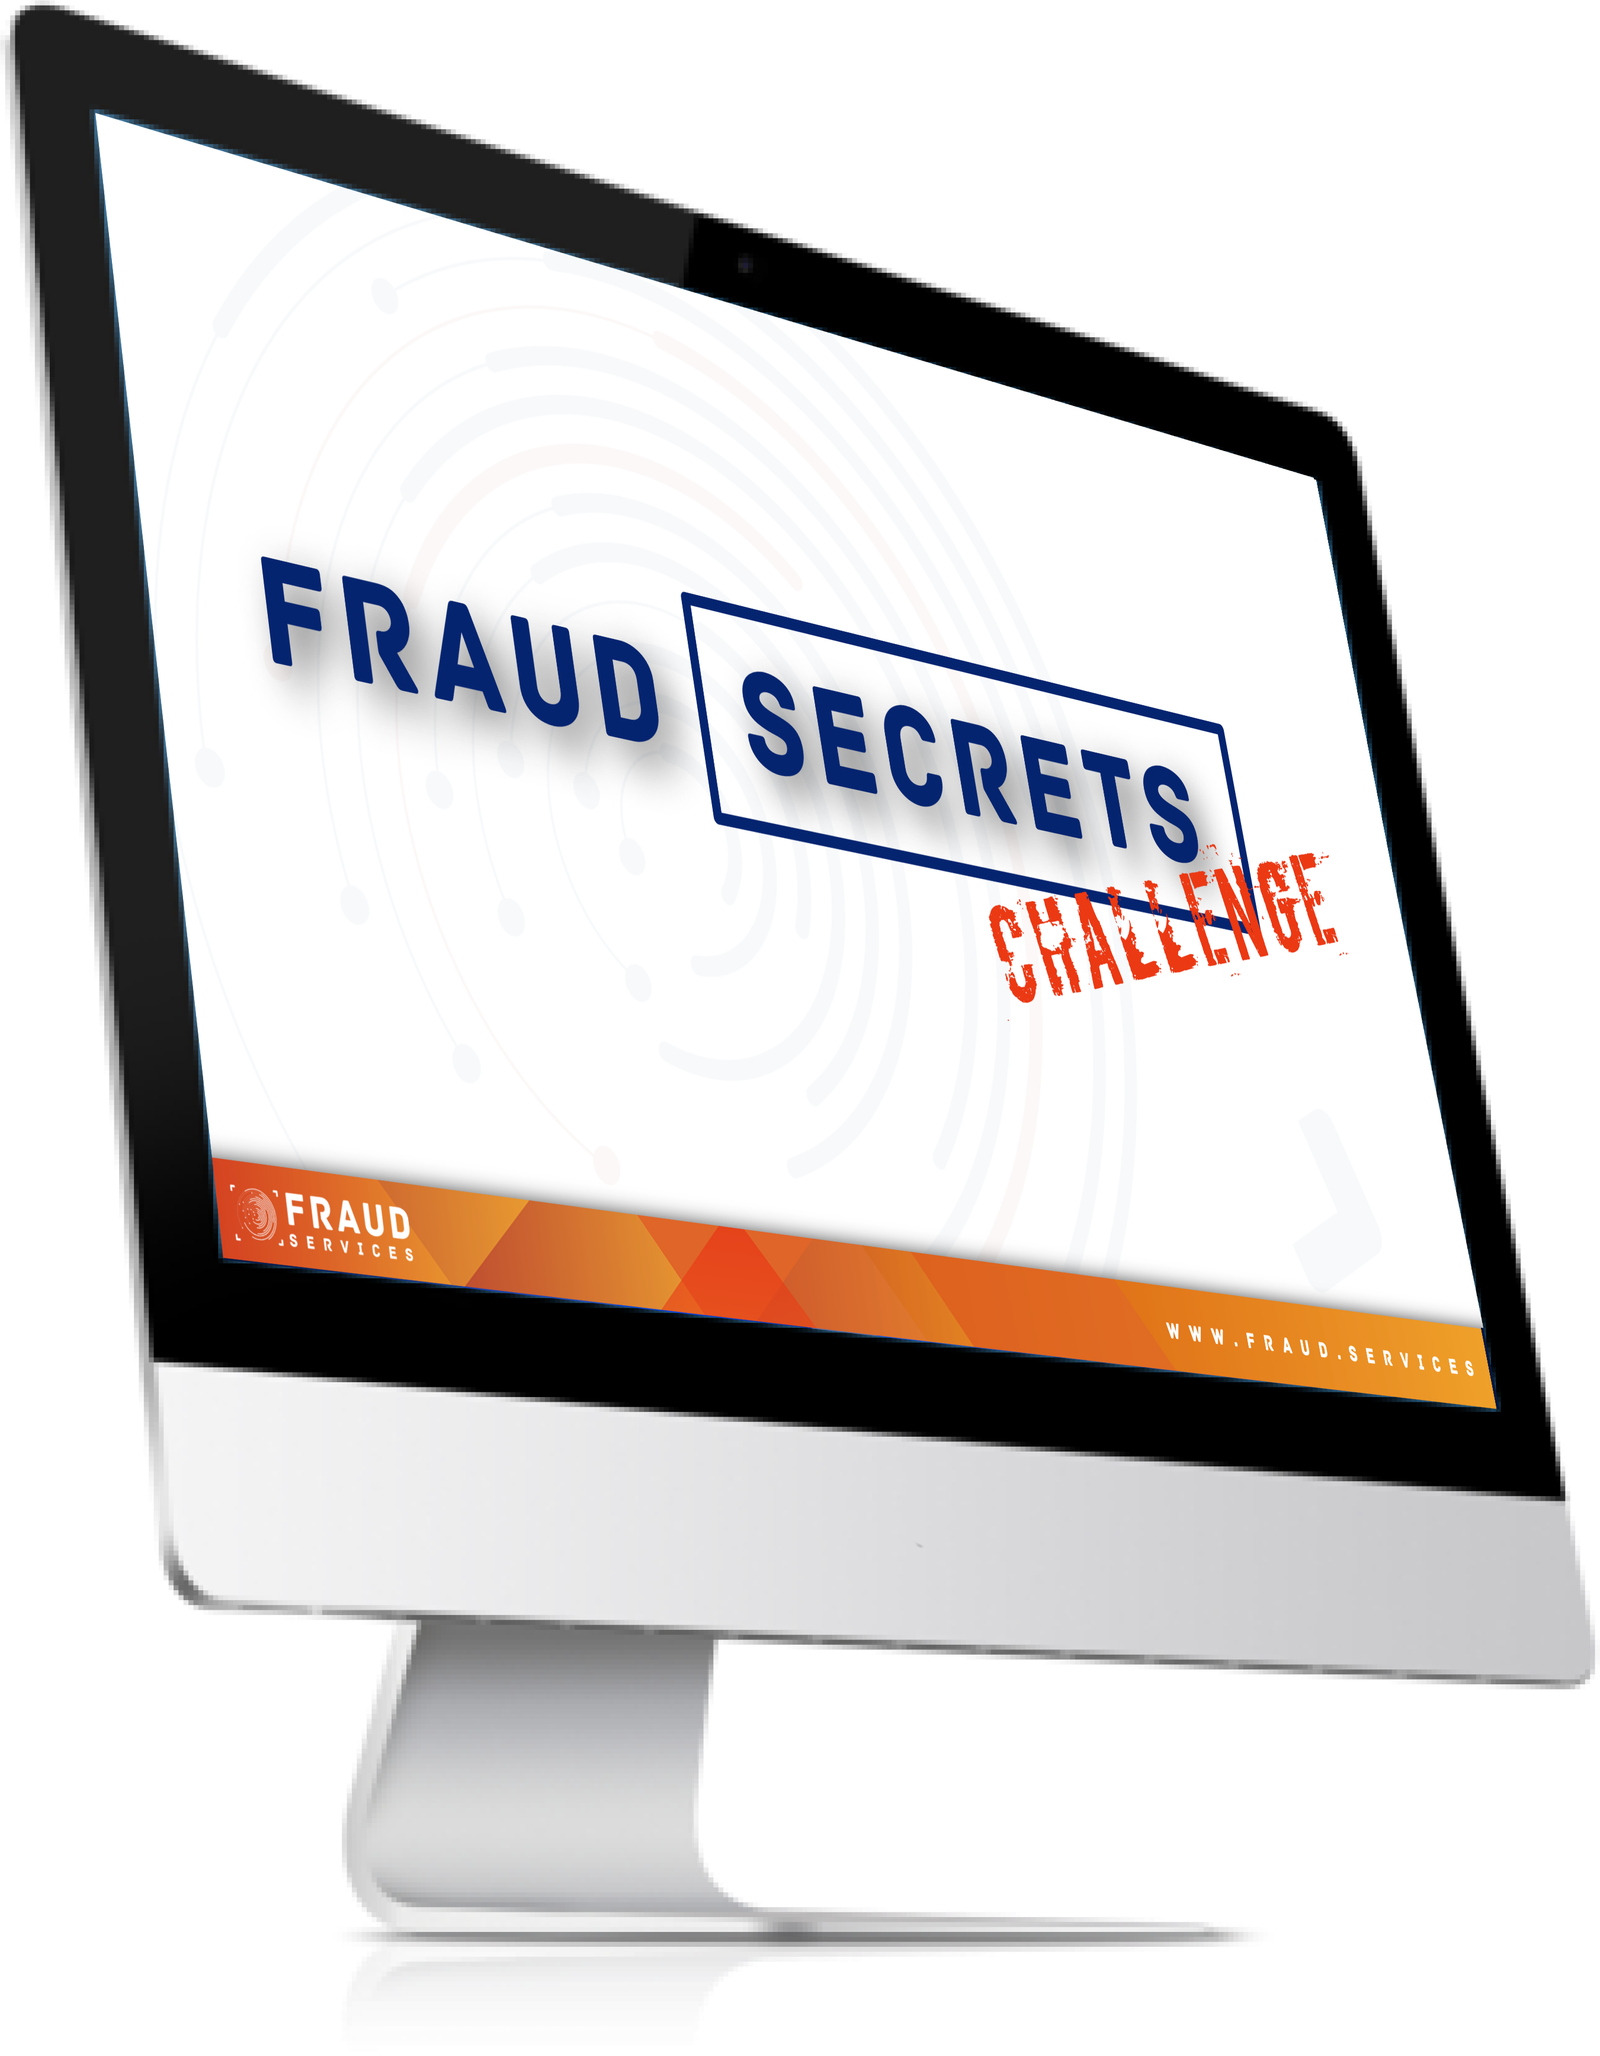 Fraud Secrets Challenge